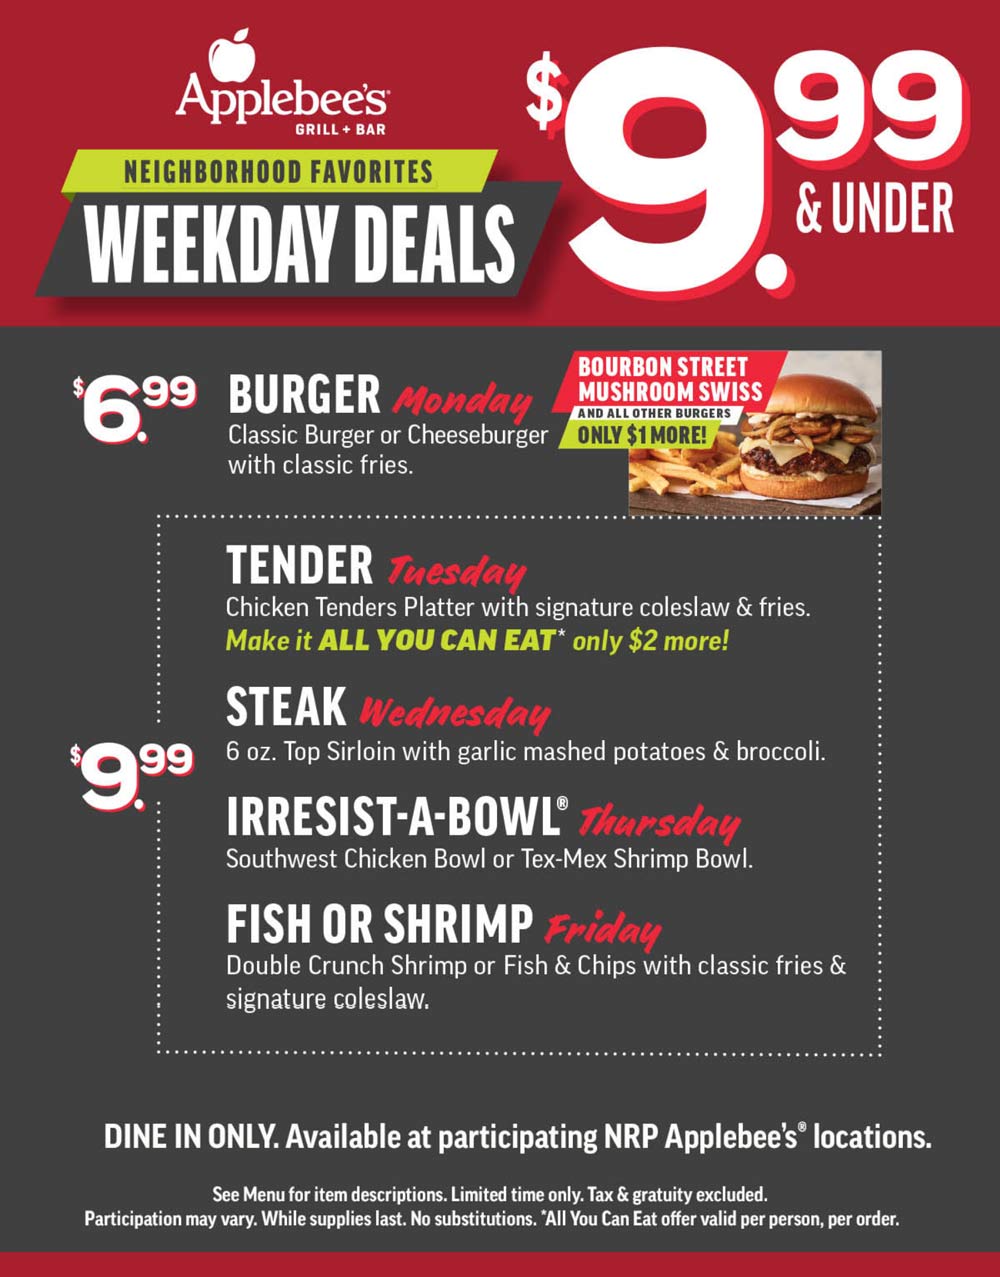 Weekday deals under $10 at Applebees restaurants #applebees